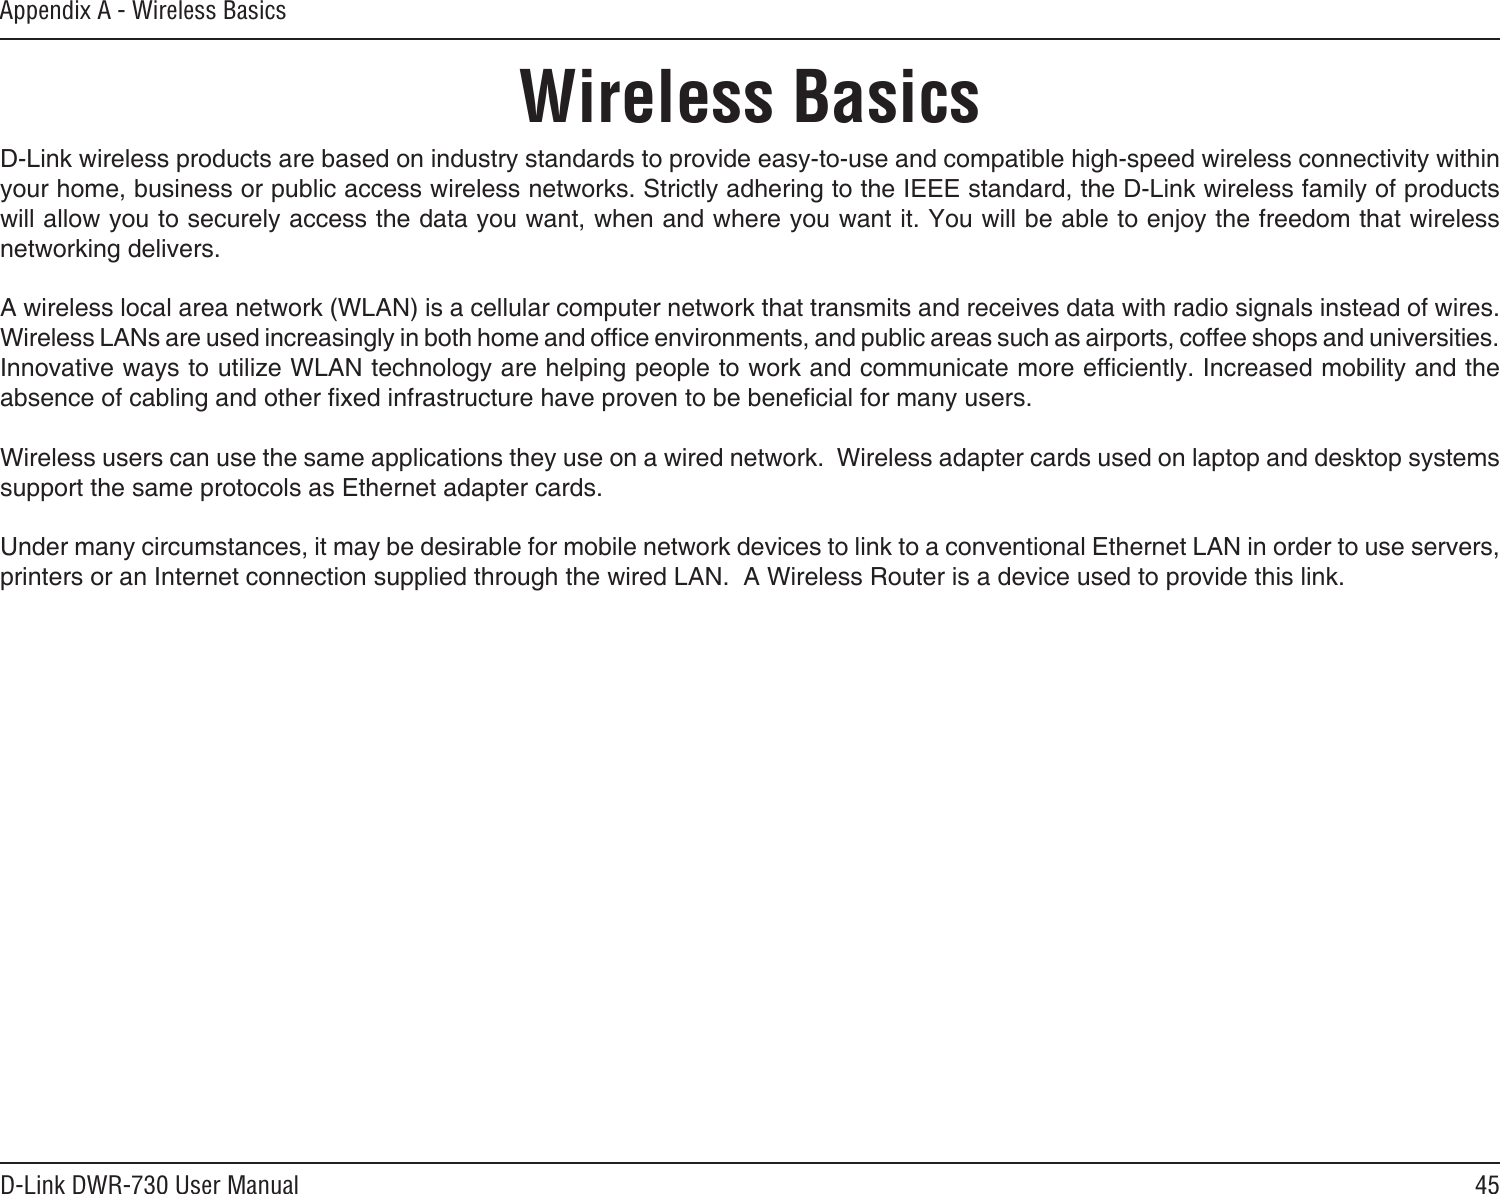 45D-Link DWR-730 User ManualAppendix A - Wireless BasicsWireless Basics